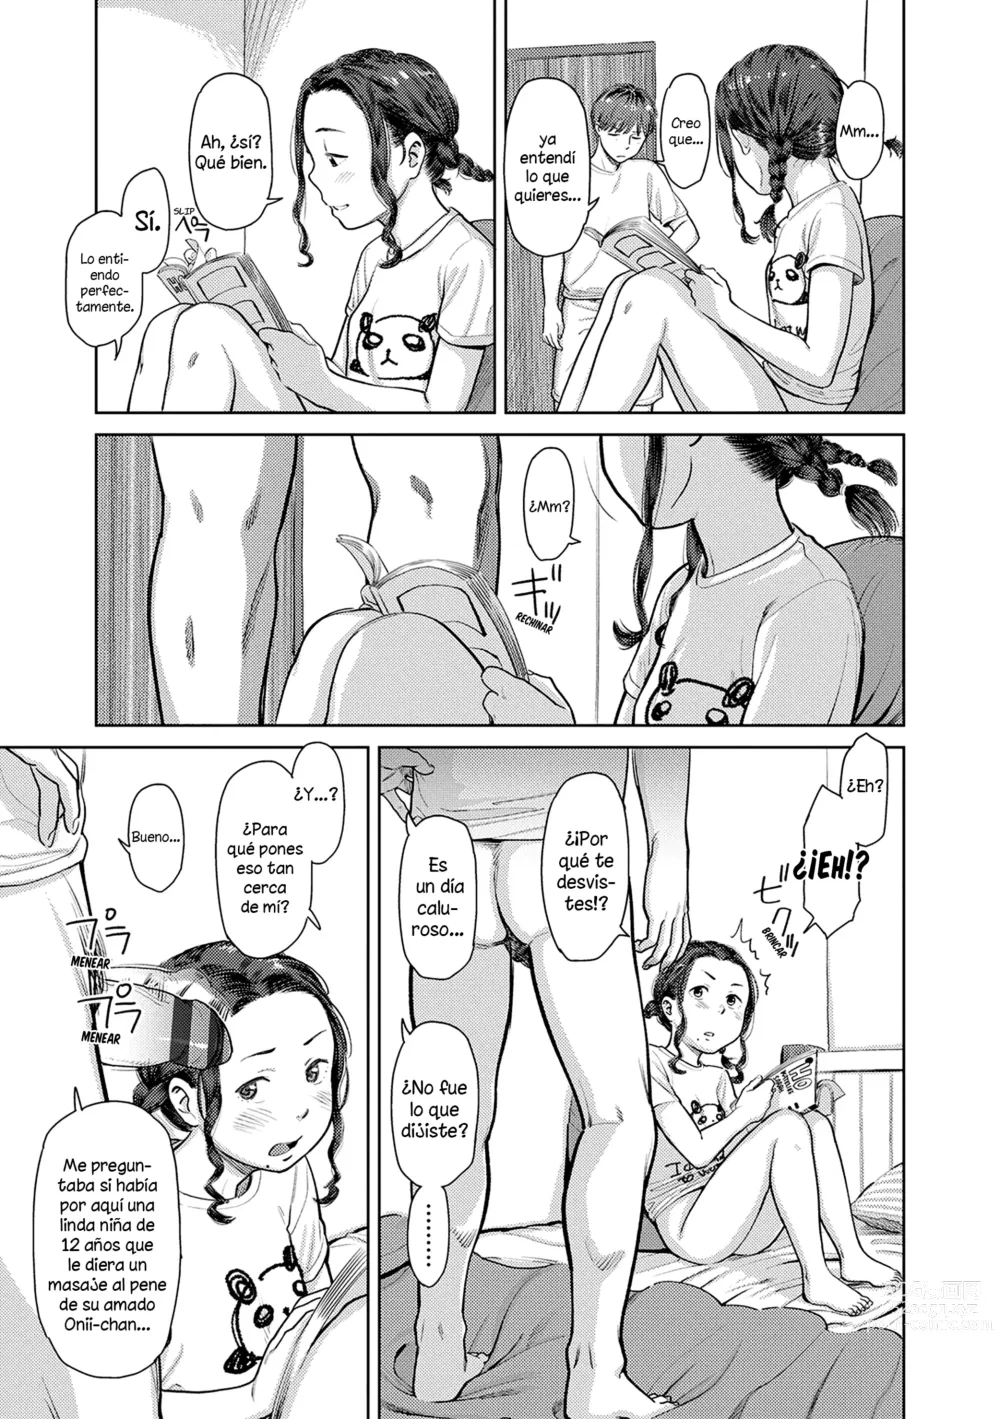 Page 17 of manga Bienvenido a casa